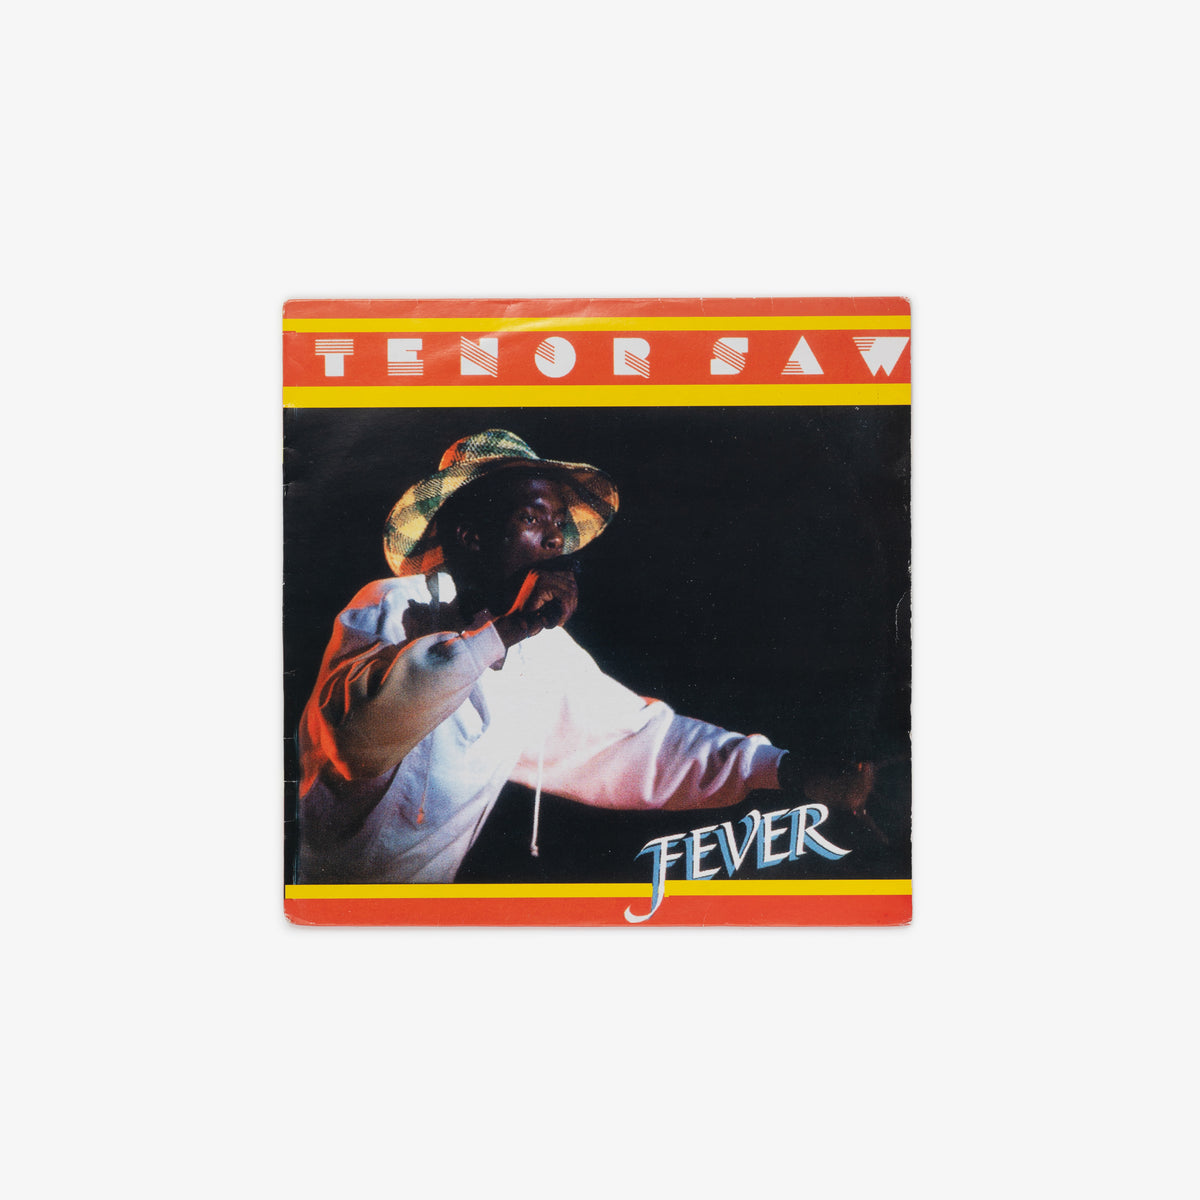 Tenor Saw - Fever LP